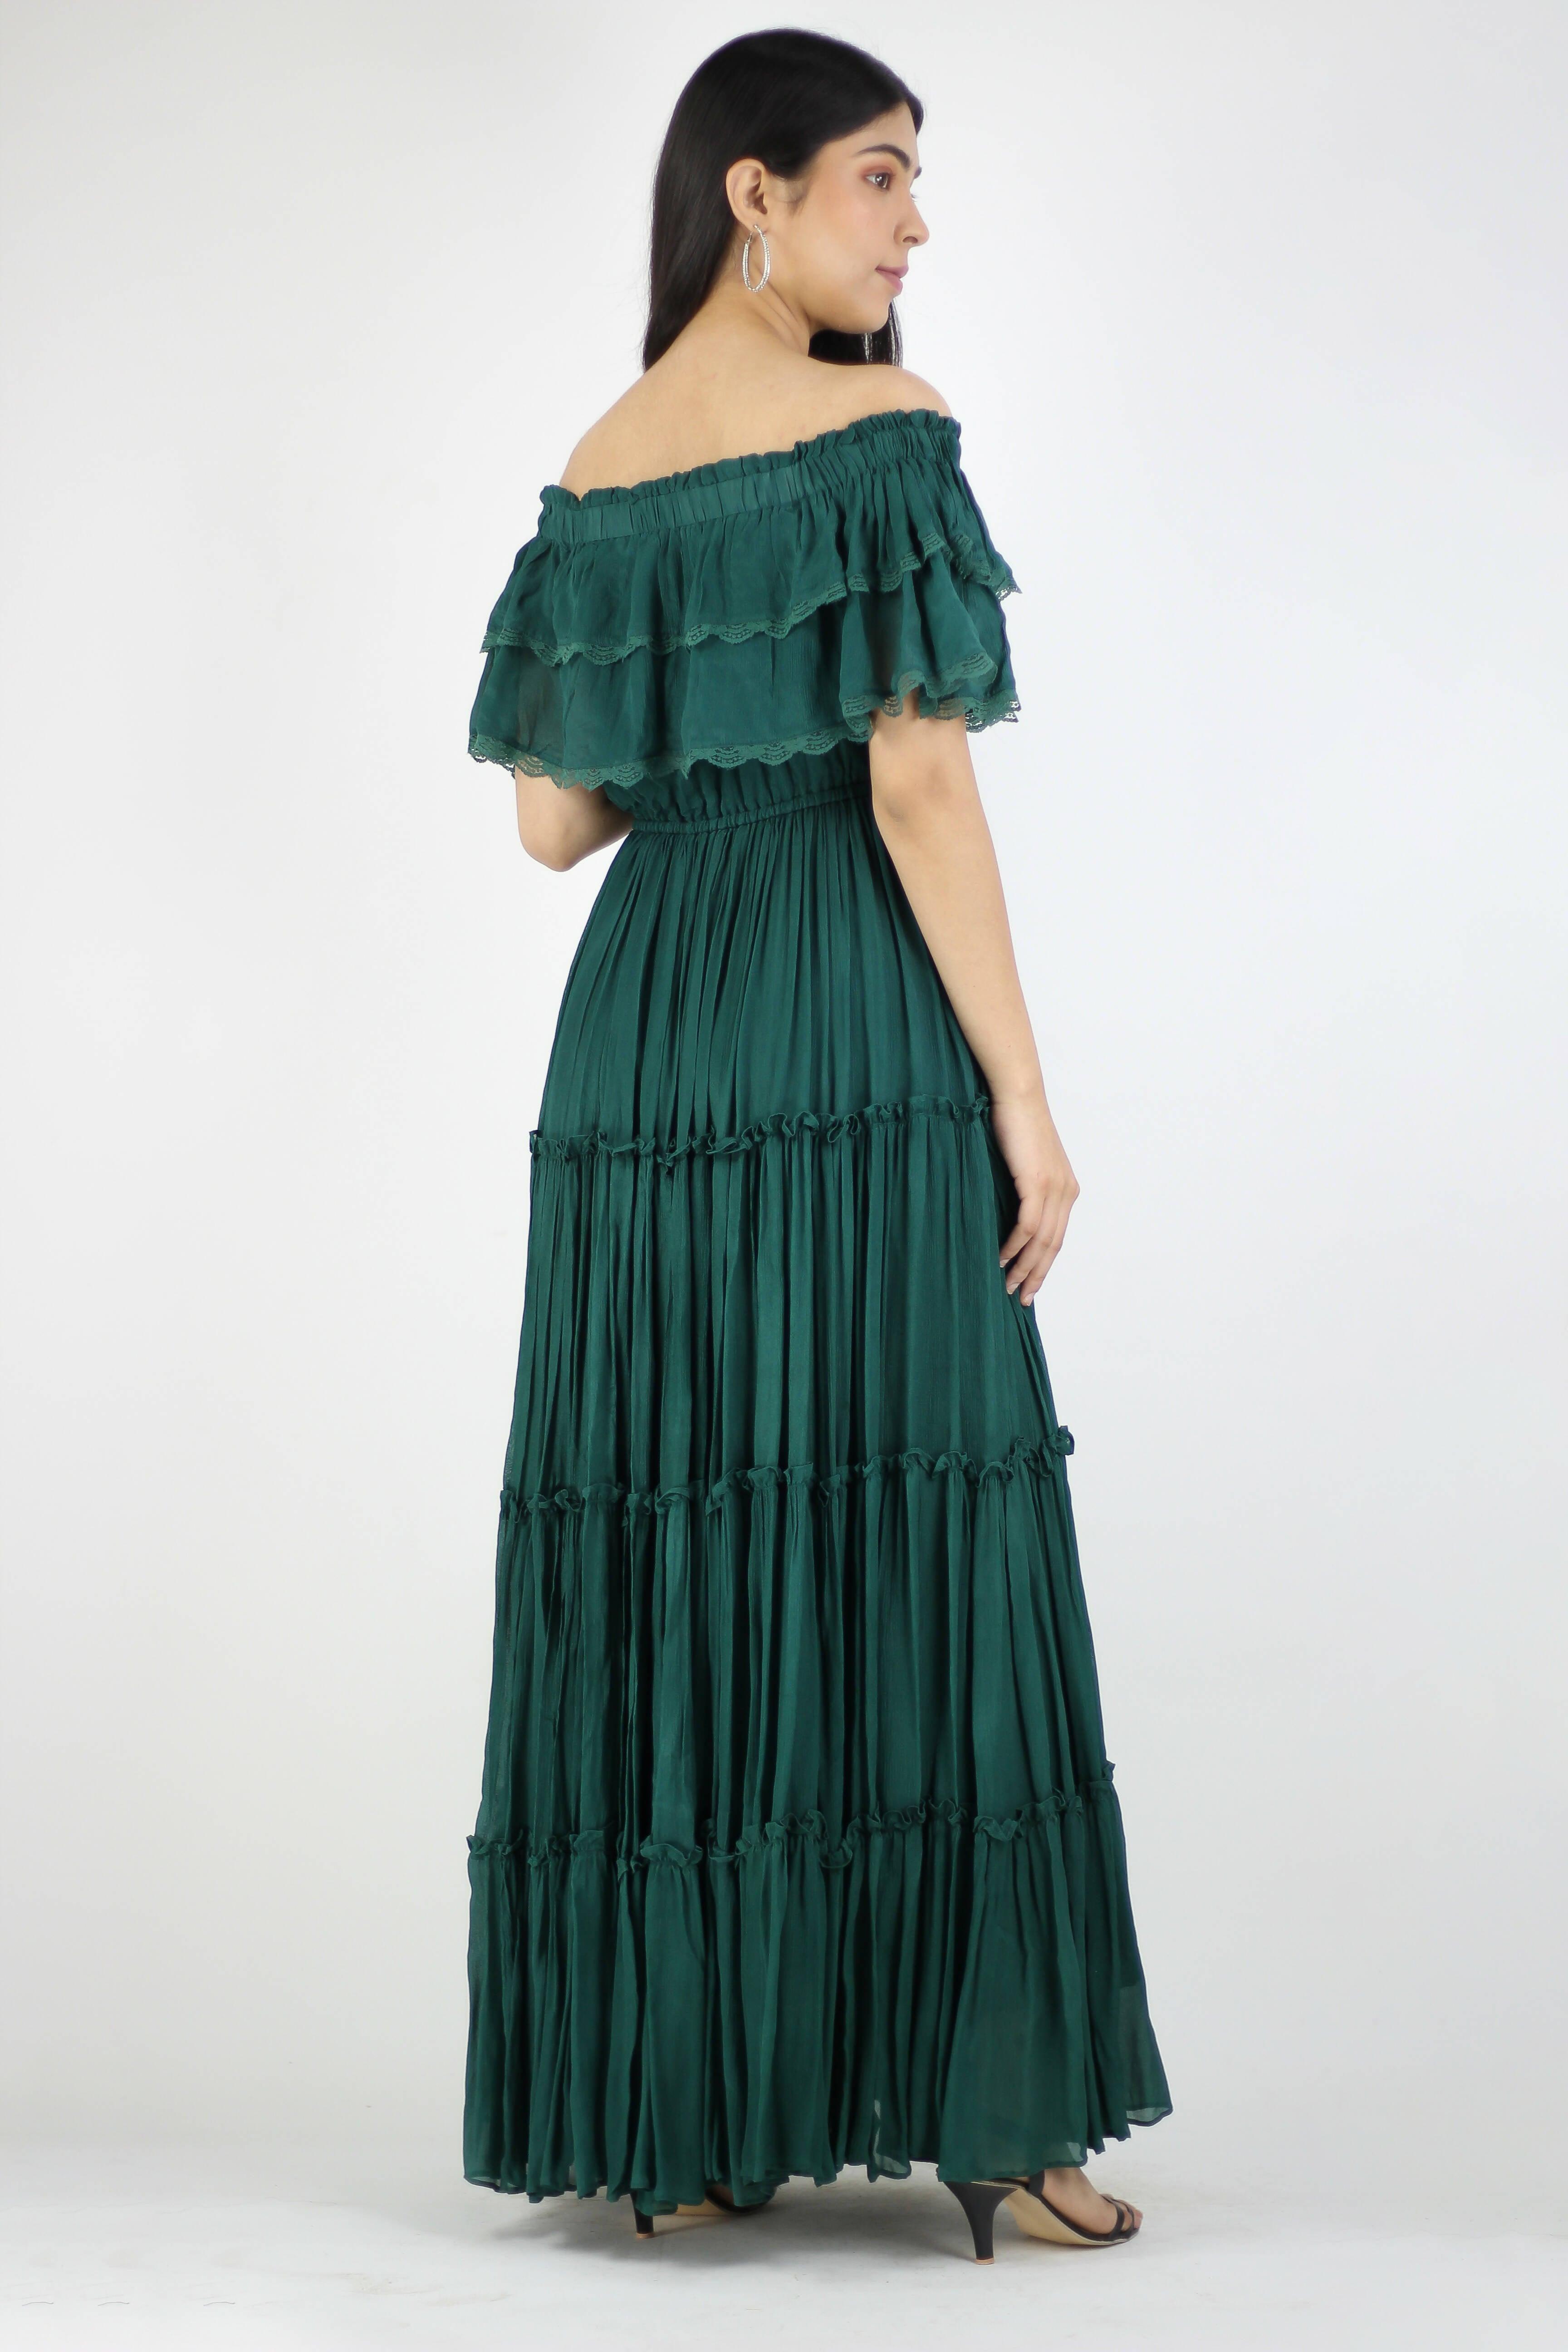 Artyska Green Off-Shoulder Chiffon Full-Length Dress